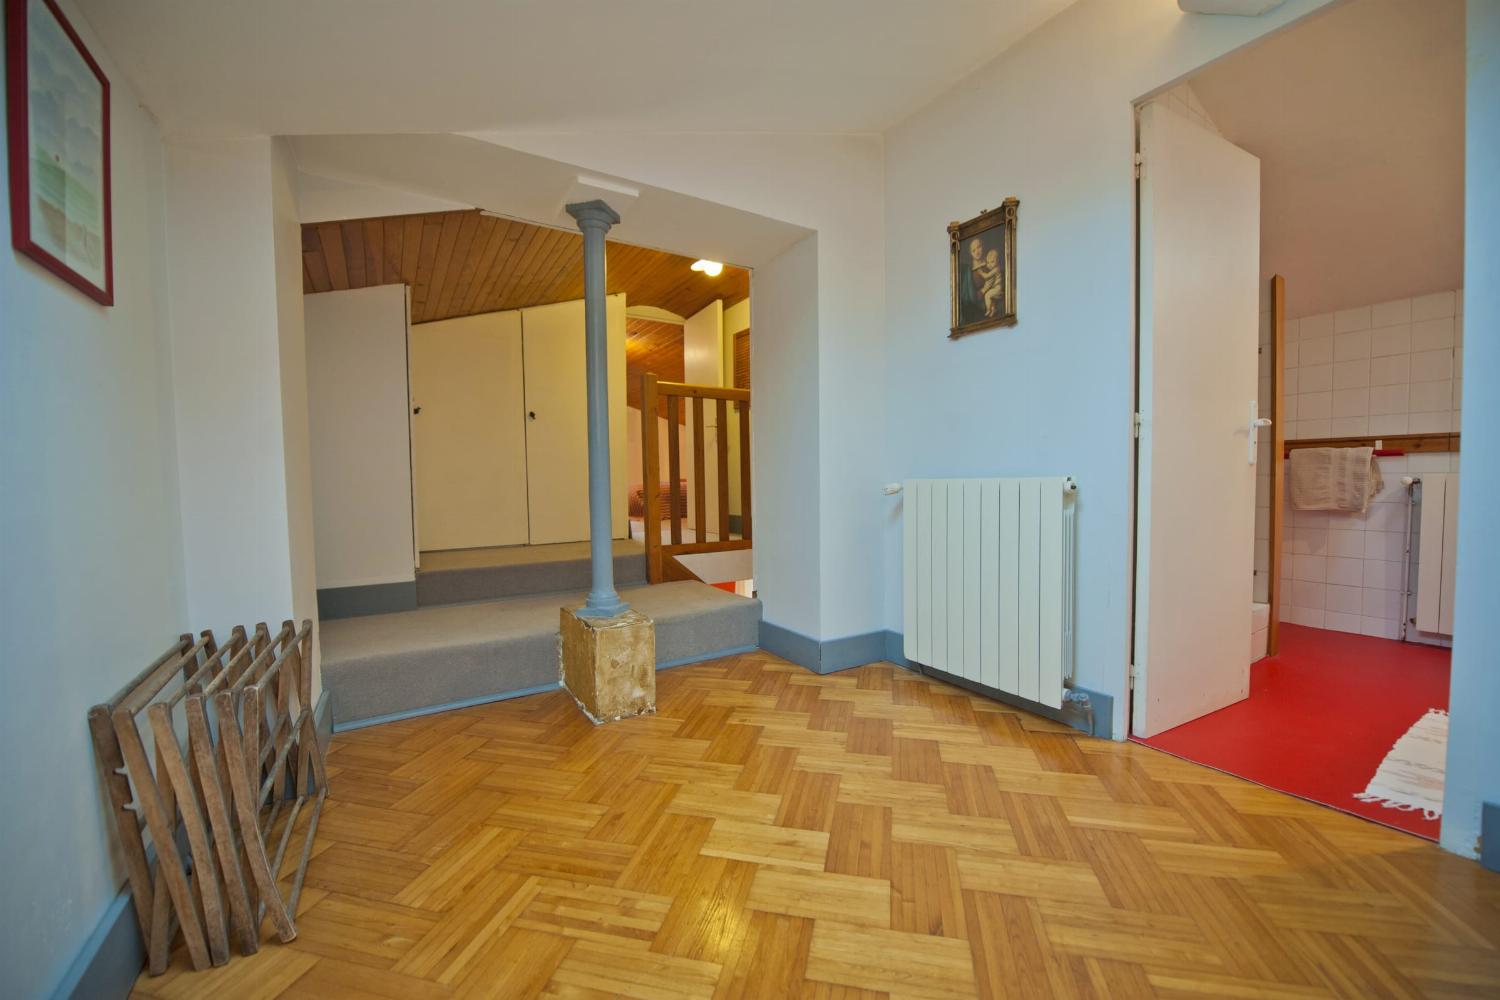 Hallway | Rental home in Gironde